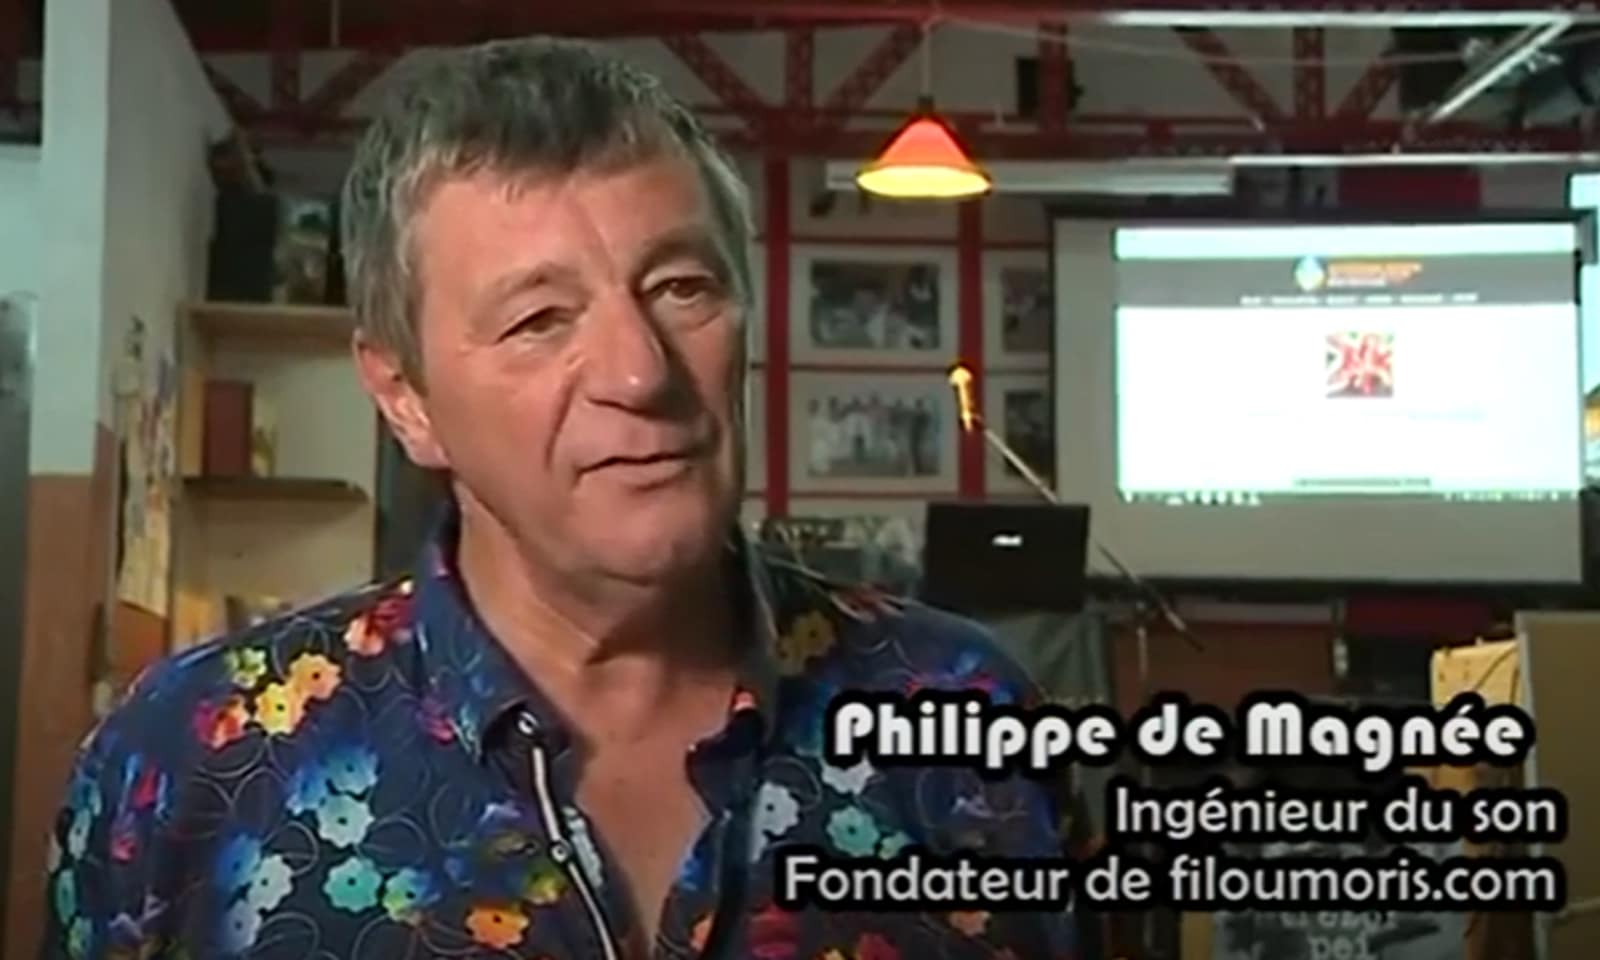 Philippe-de-Magnée,-fondateur-du-site-Filoumoris